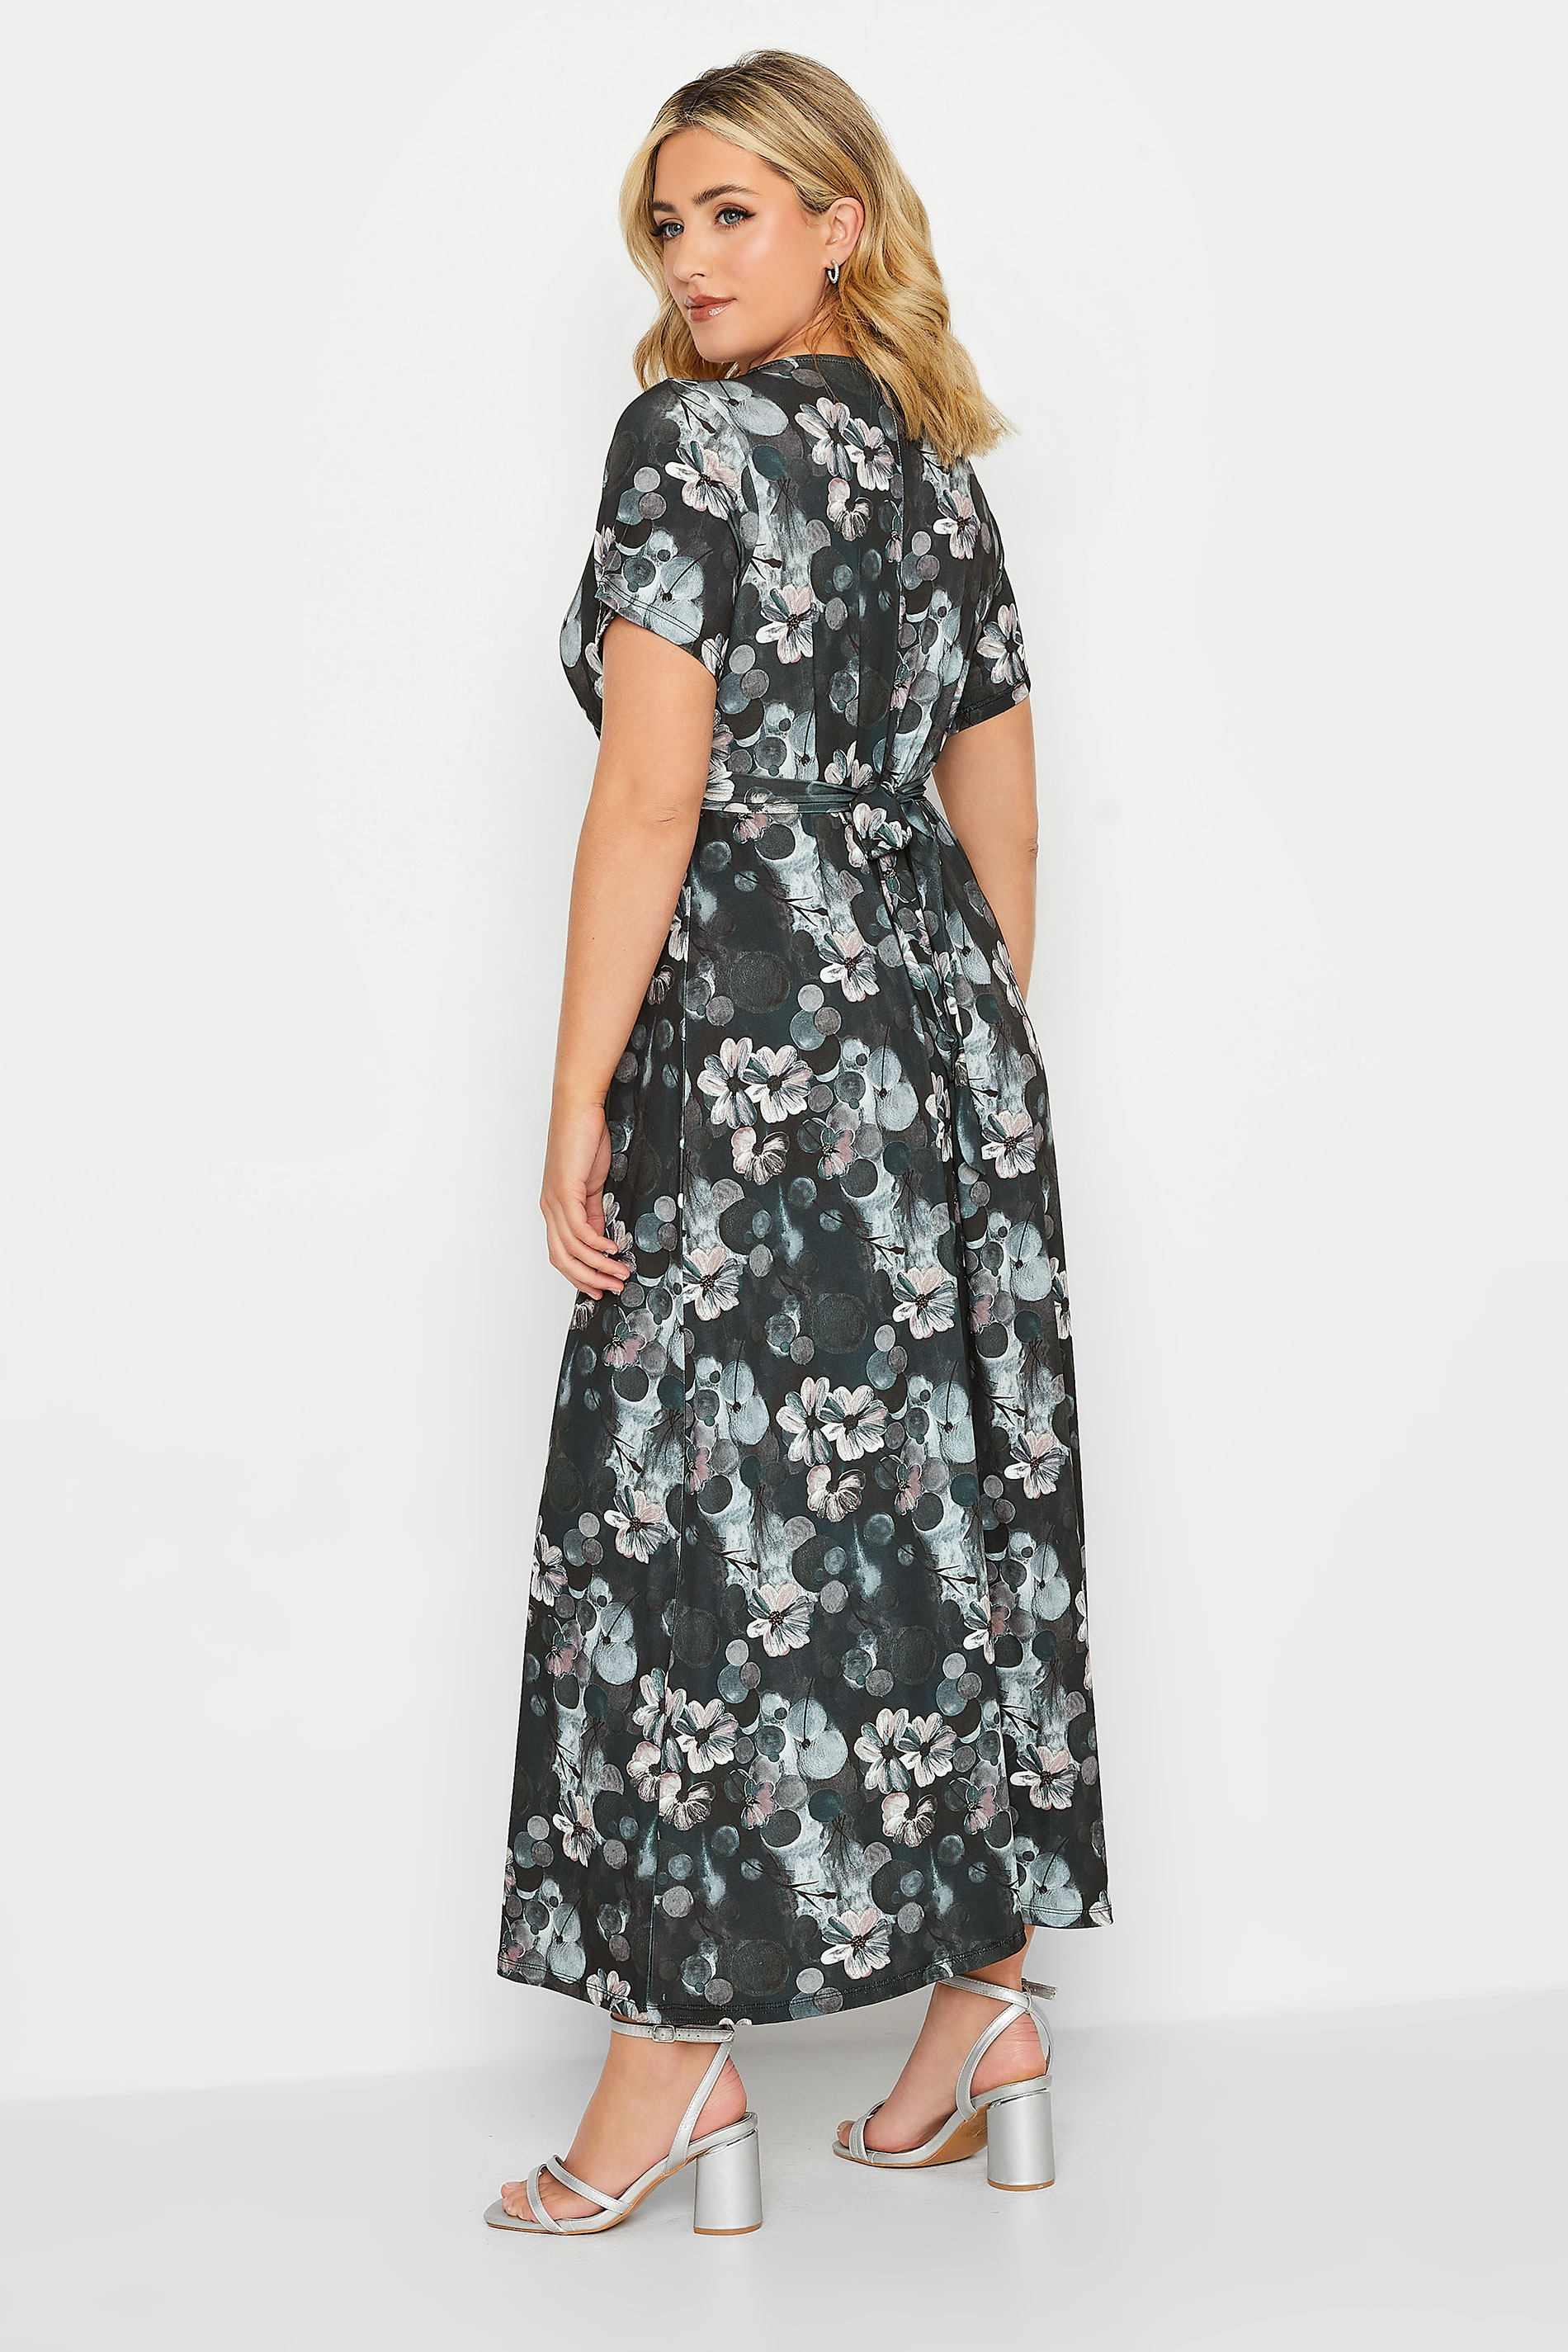 YOURS Curve Plus Size Black V-Neck Floral Wrap Dress | Yours Clothing  3